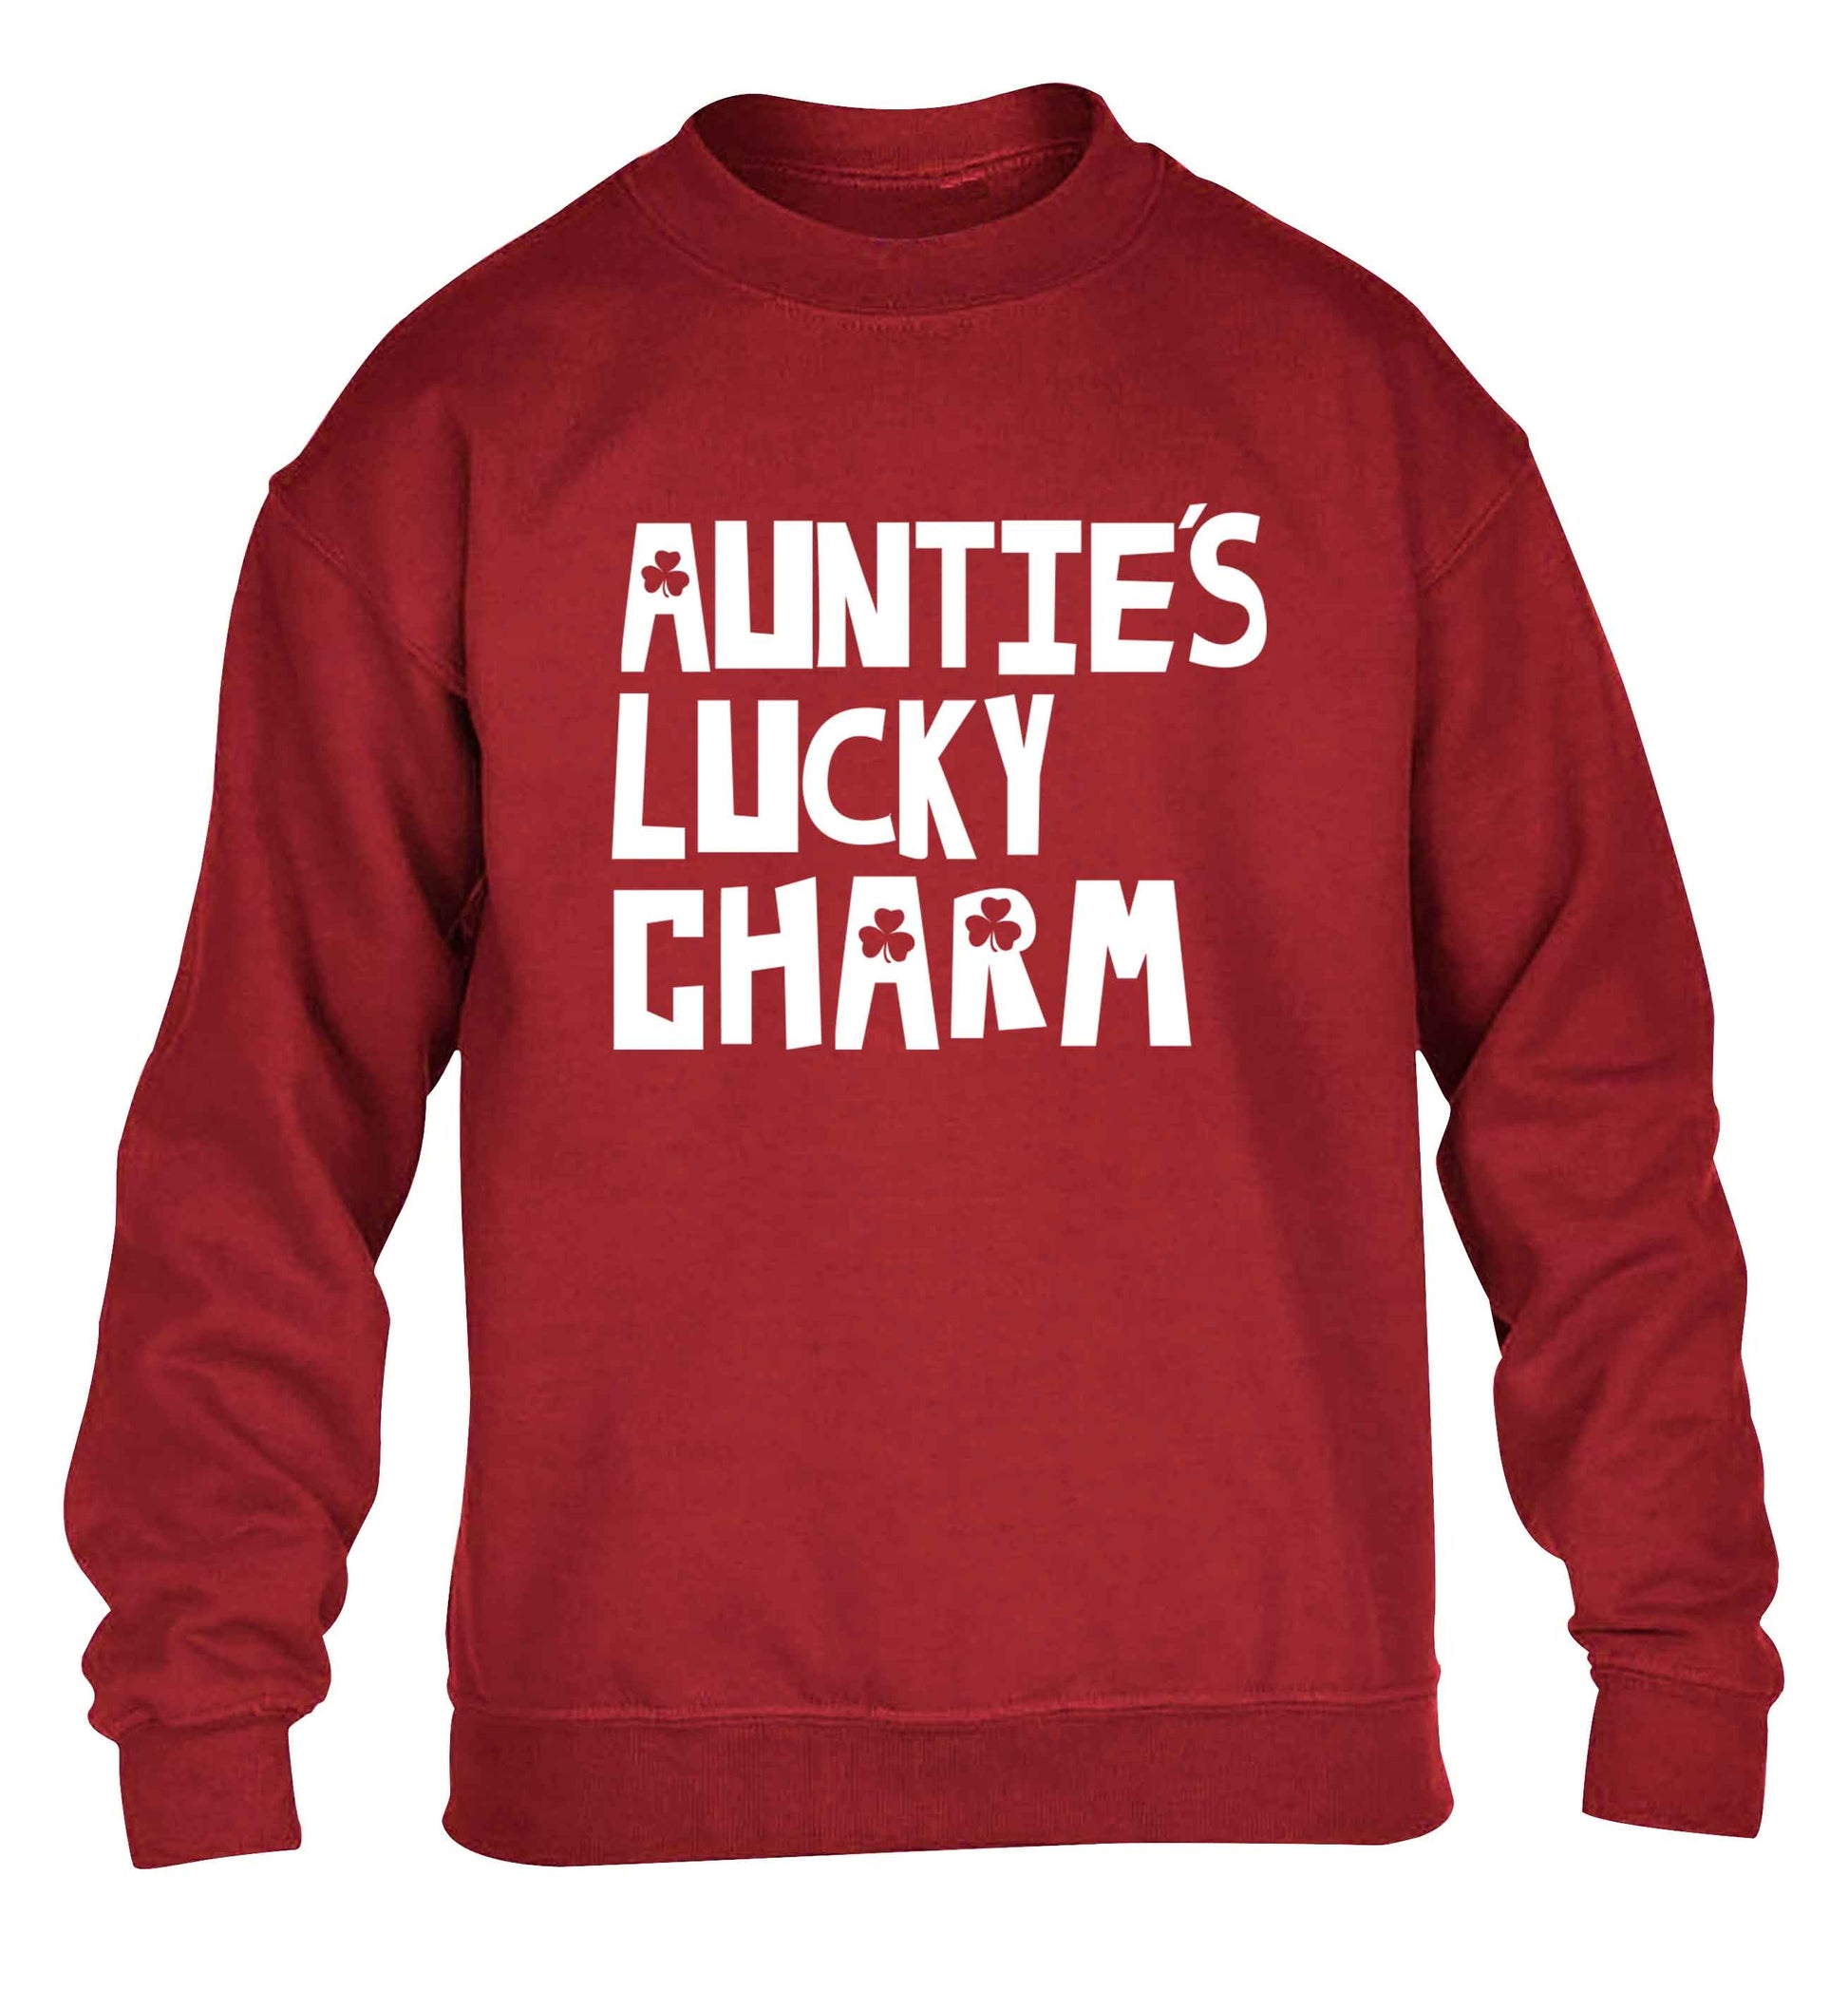 Auntie's lucky charm children's grey sweater 12-13 Years